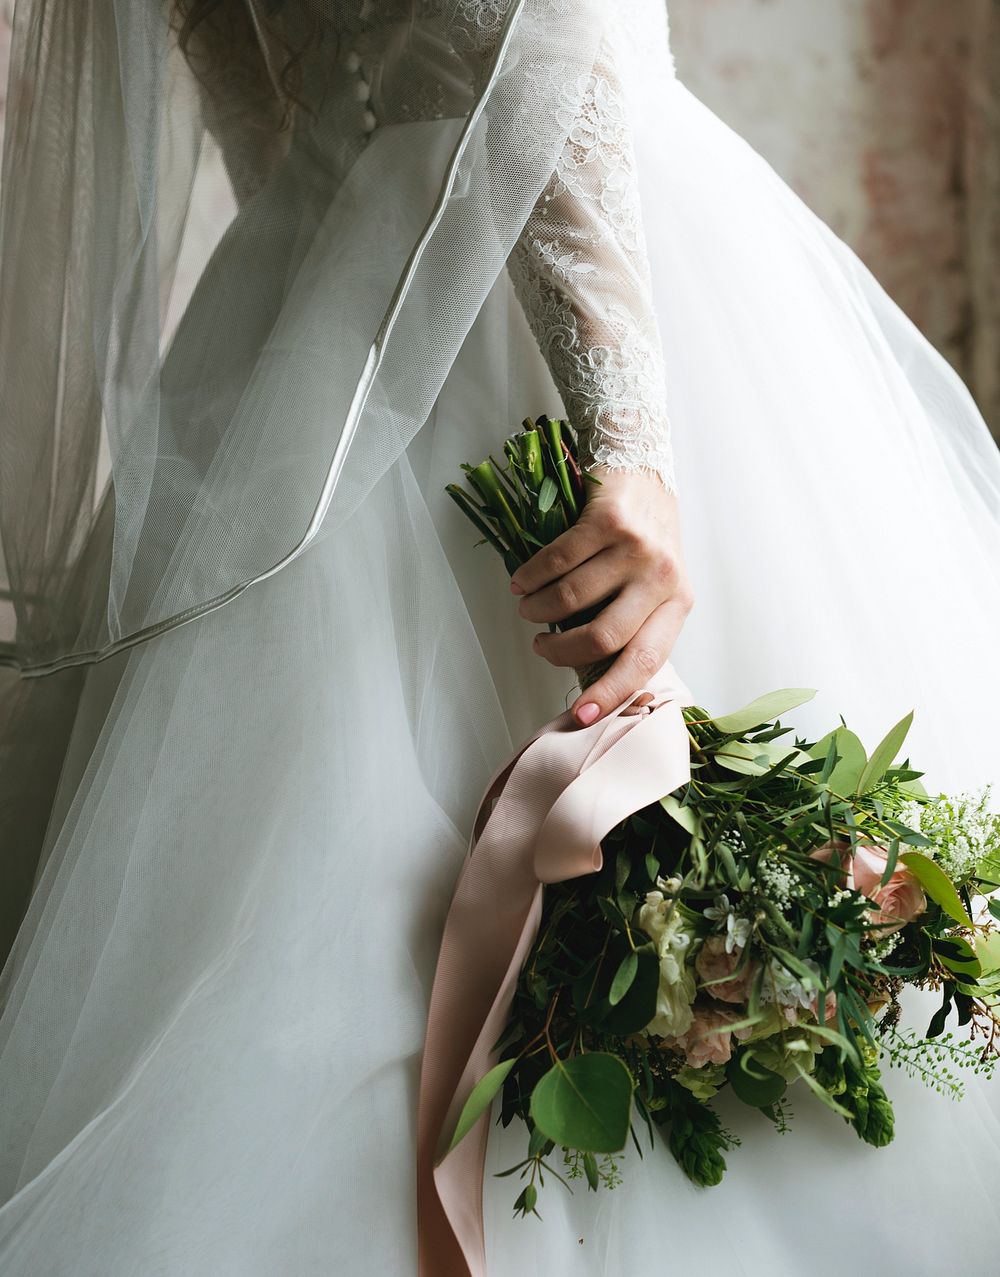 Closeup of a bride's bouquet of flowers